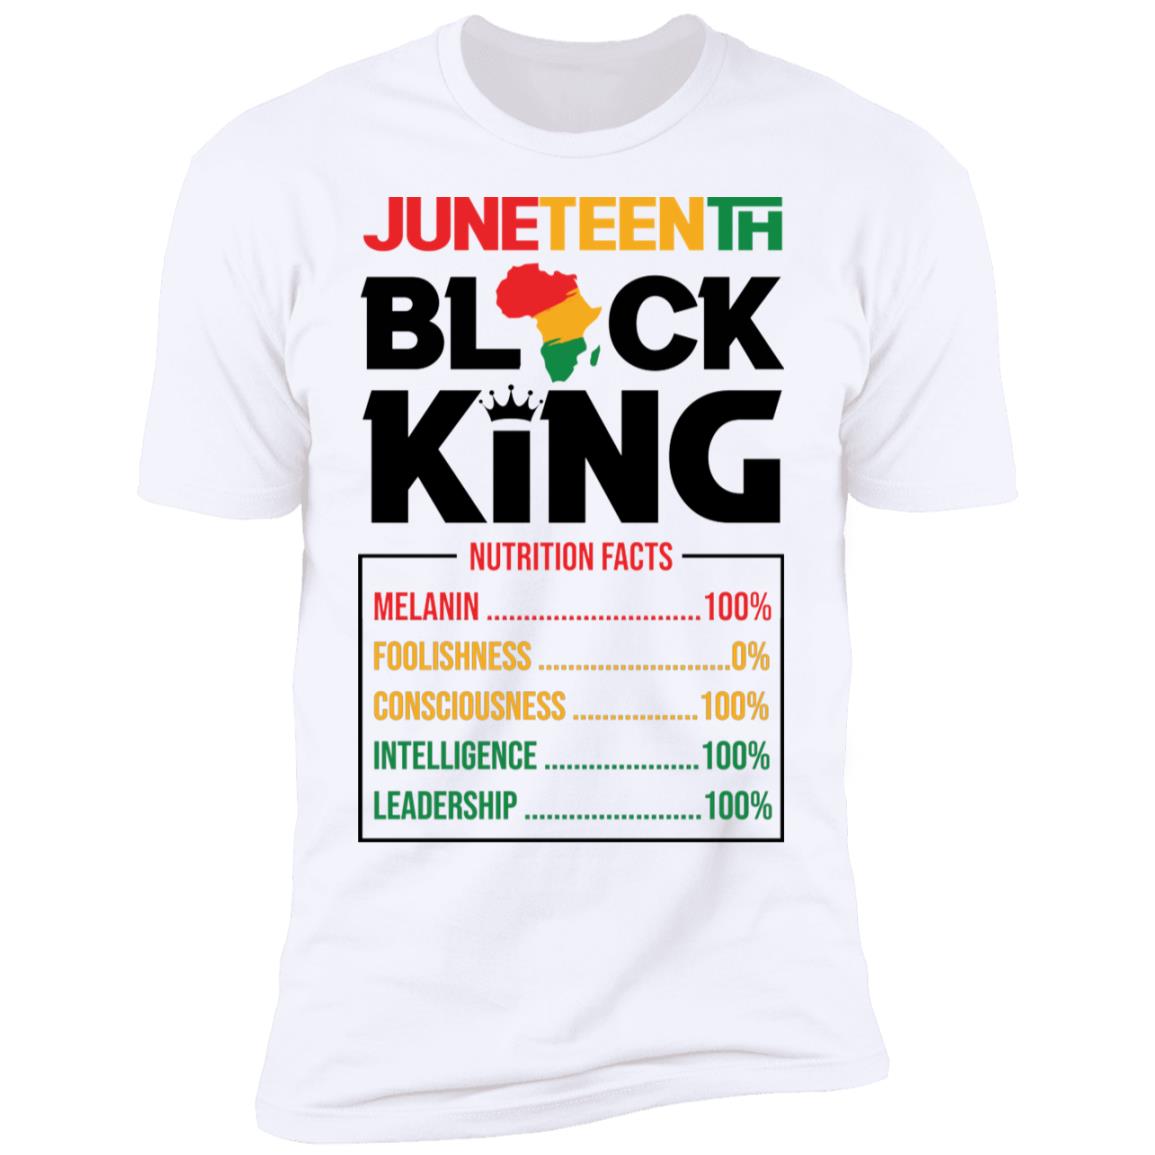 Juneteenth Black King Nutrition Facts T-shirt Apparel Gearment Premium T-Shirt White S